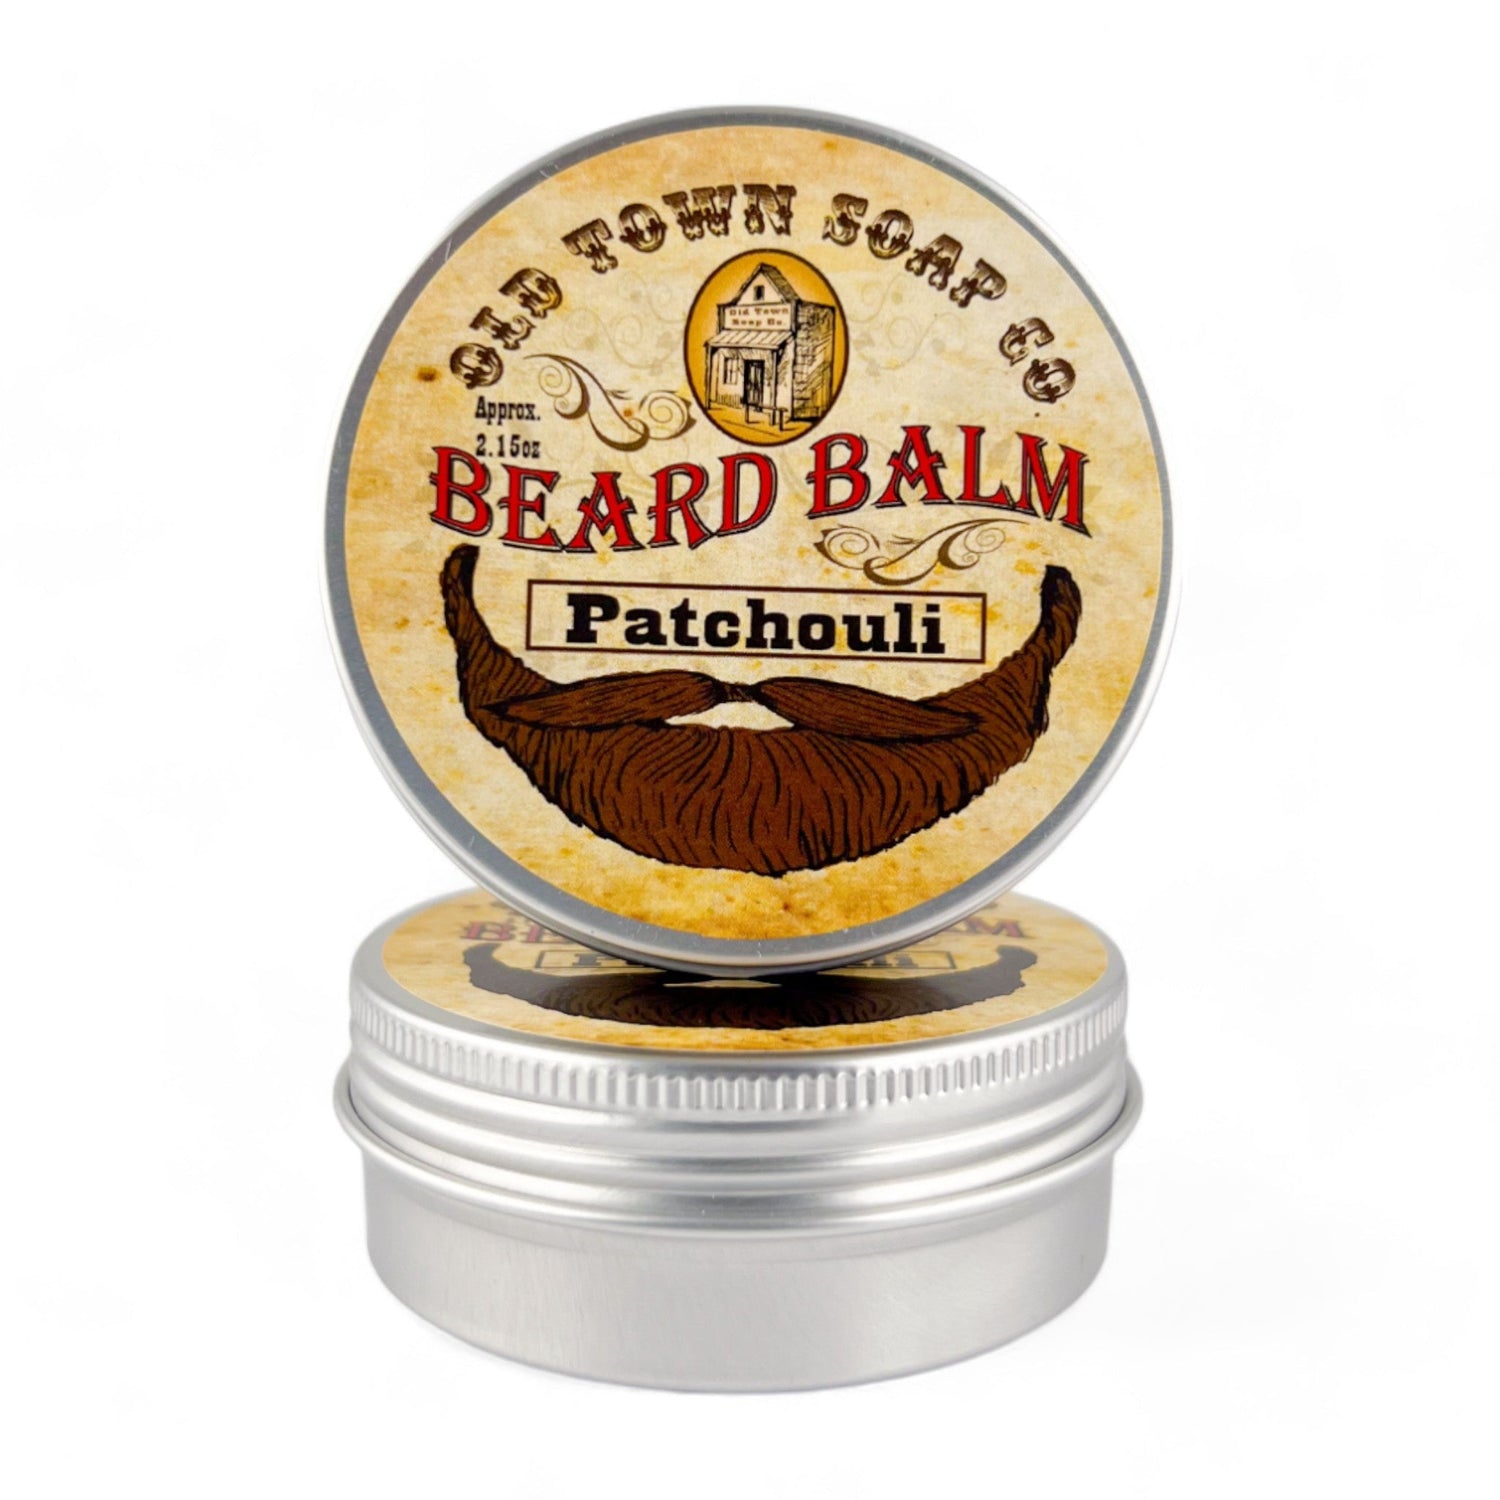 Patchouli Beard Balm - Old Town Soap Co.